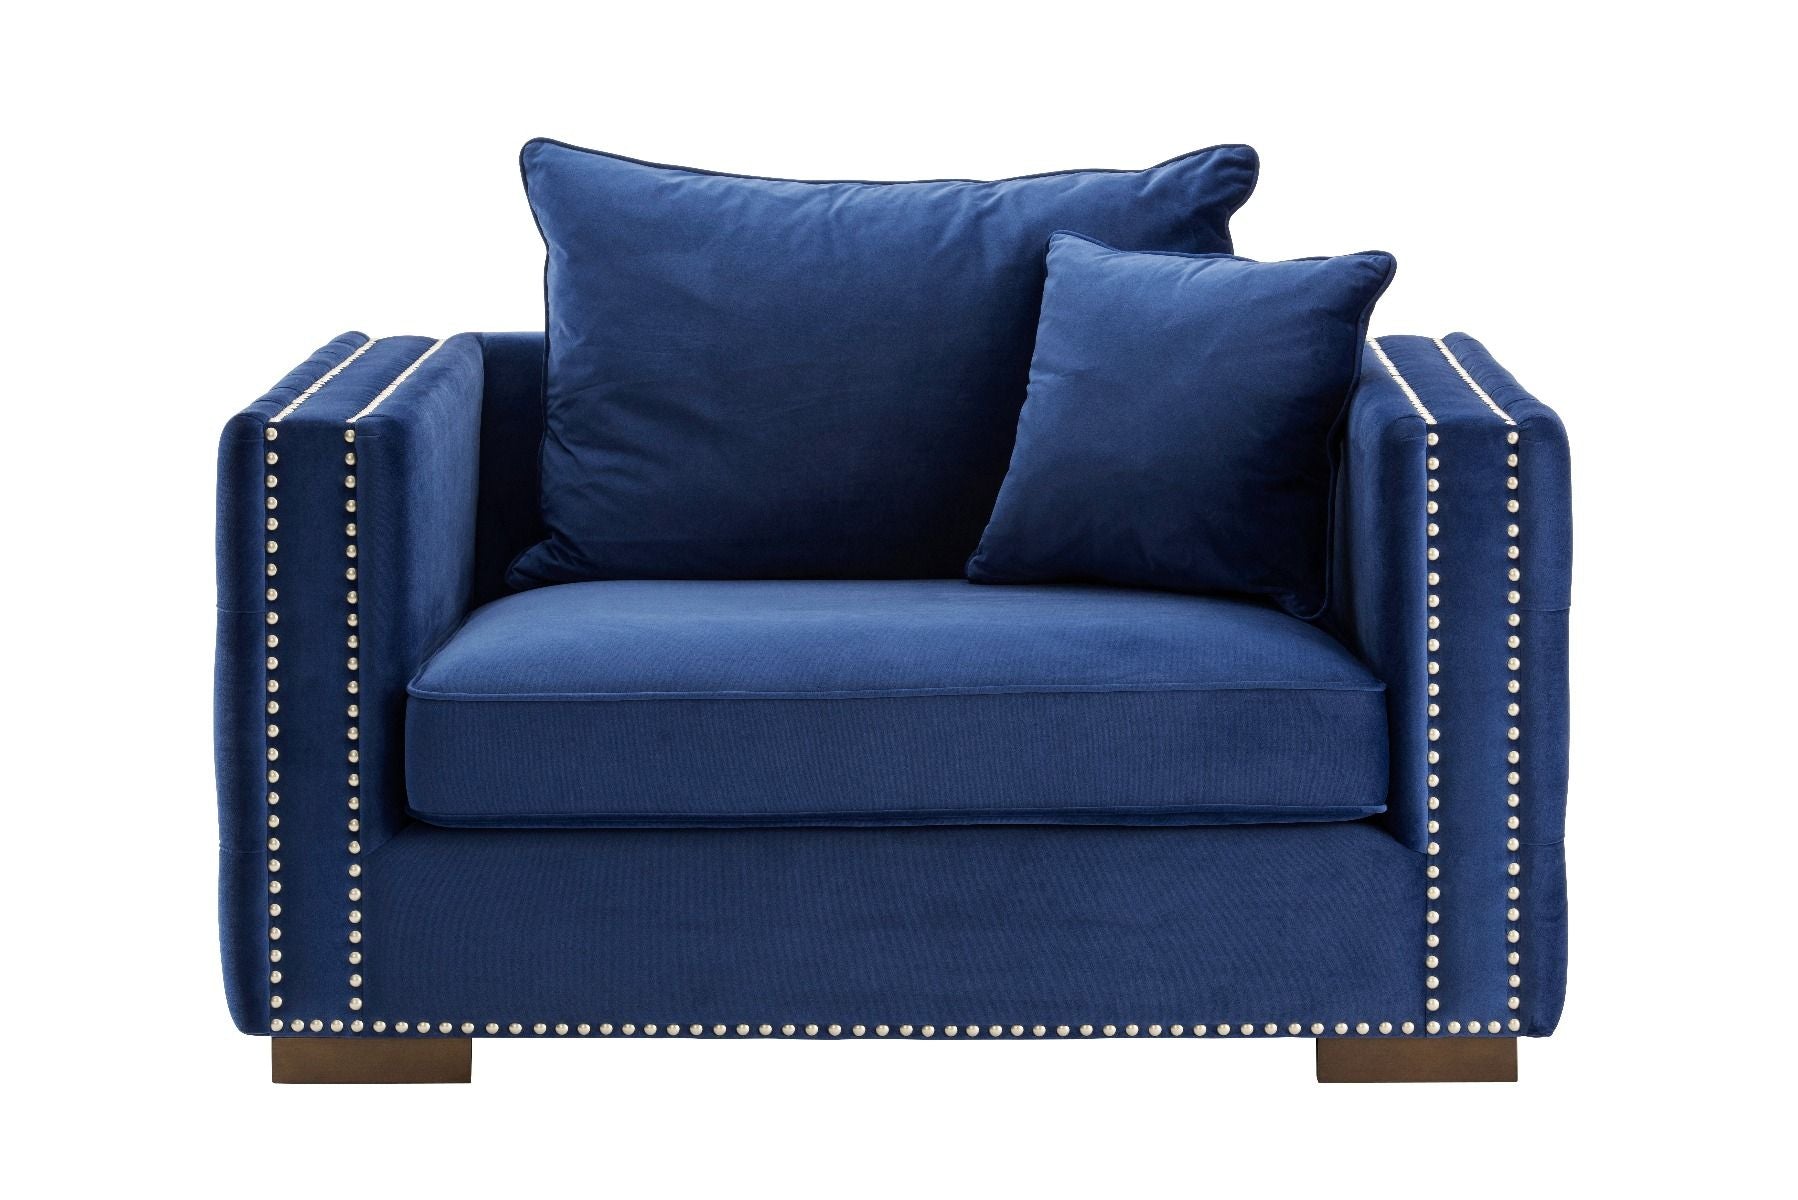 Moscow Snuggle Chair - Blue Velvet